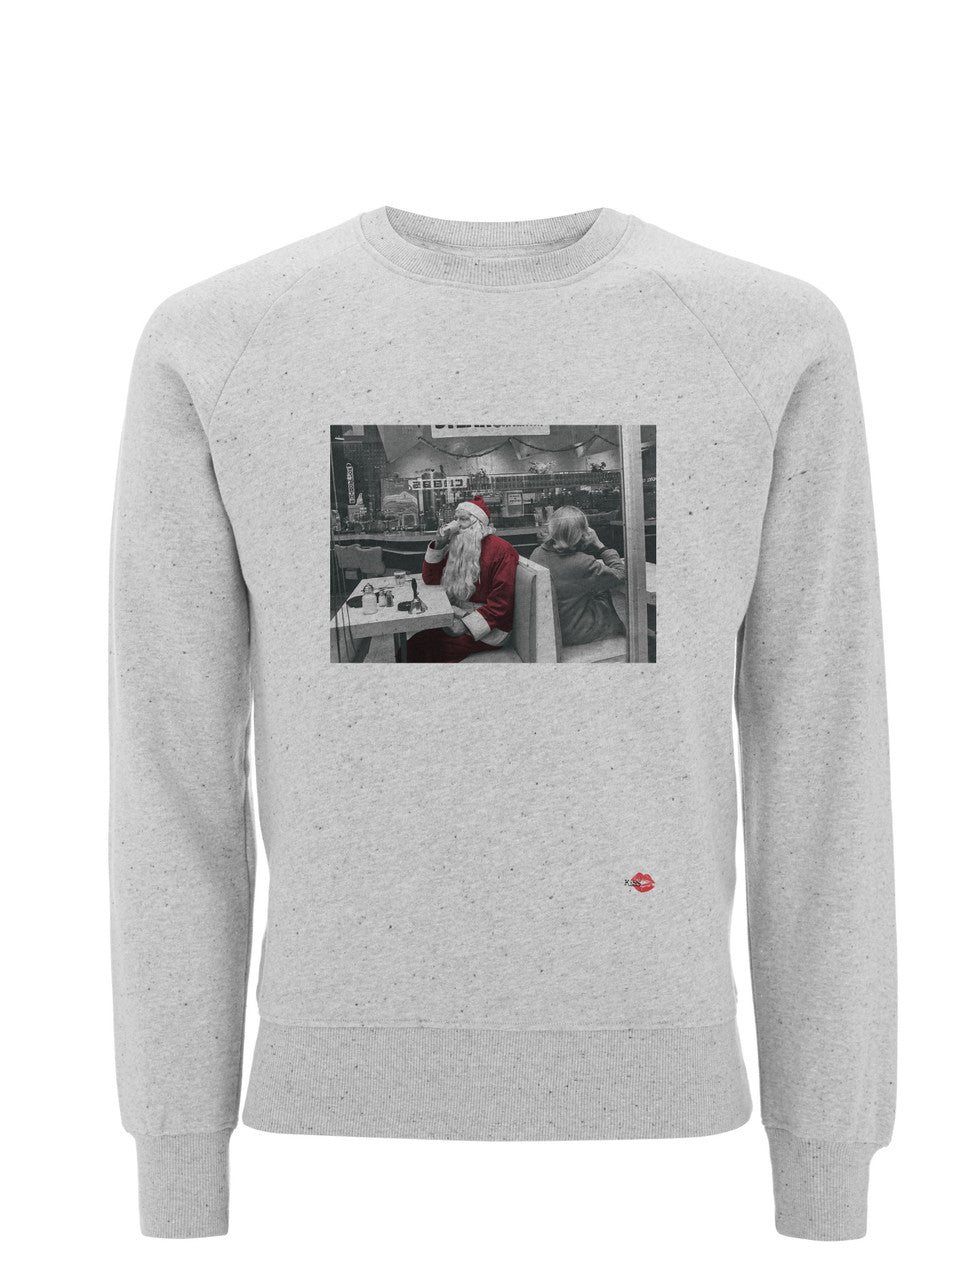 Santa Coffee Break KiSS Sweatshirt - Happy Christmas - Xmas - St Nick - Claus Jumper